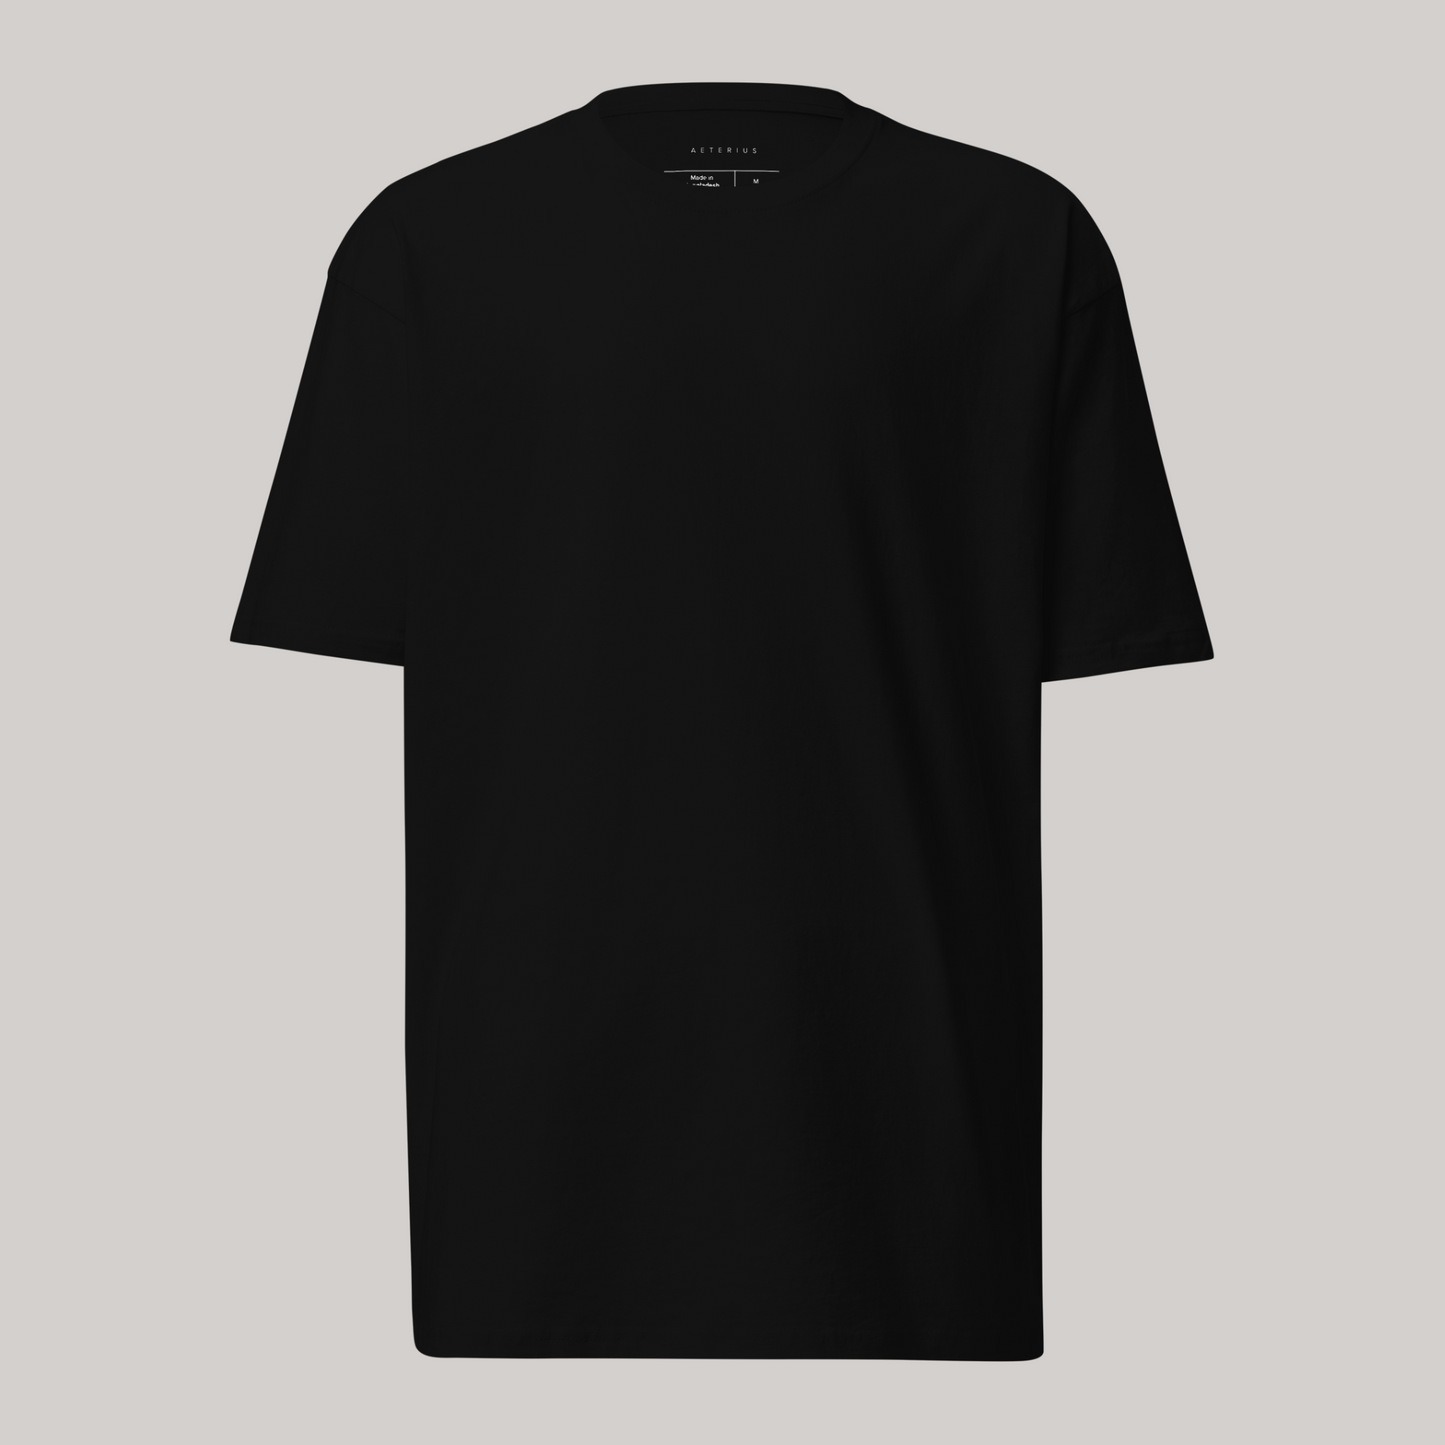 Cosmic Vision T-Shirt x Black and Blue Graphic Tee x Black T-Shirt